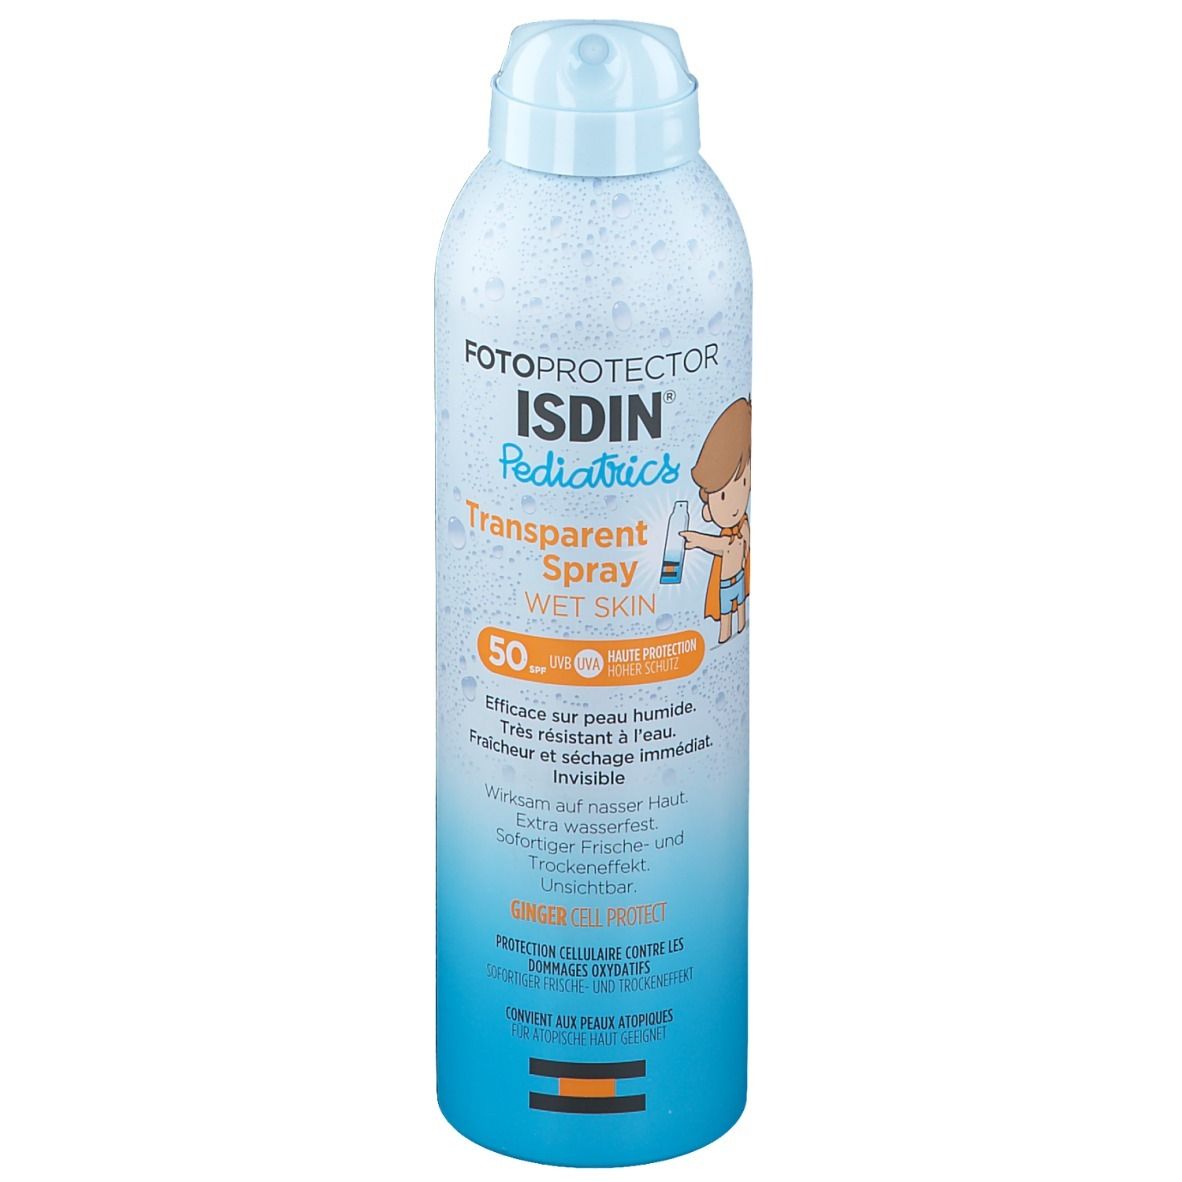 Isdin® Fotoprotector Pediatrics Transparent Spray Wet Skin Spf50+